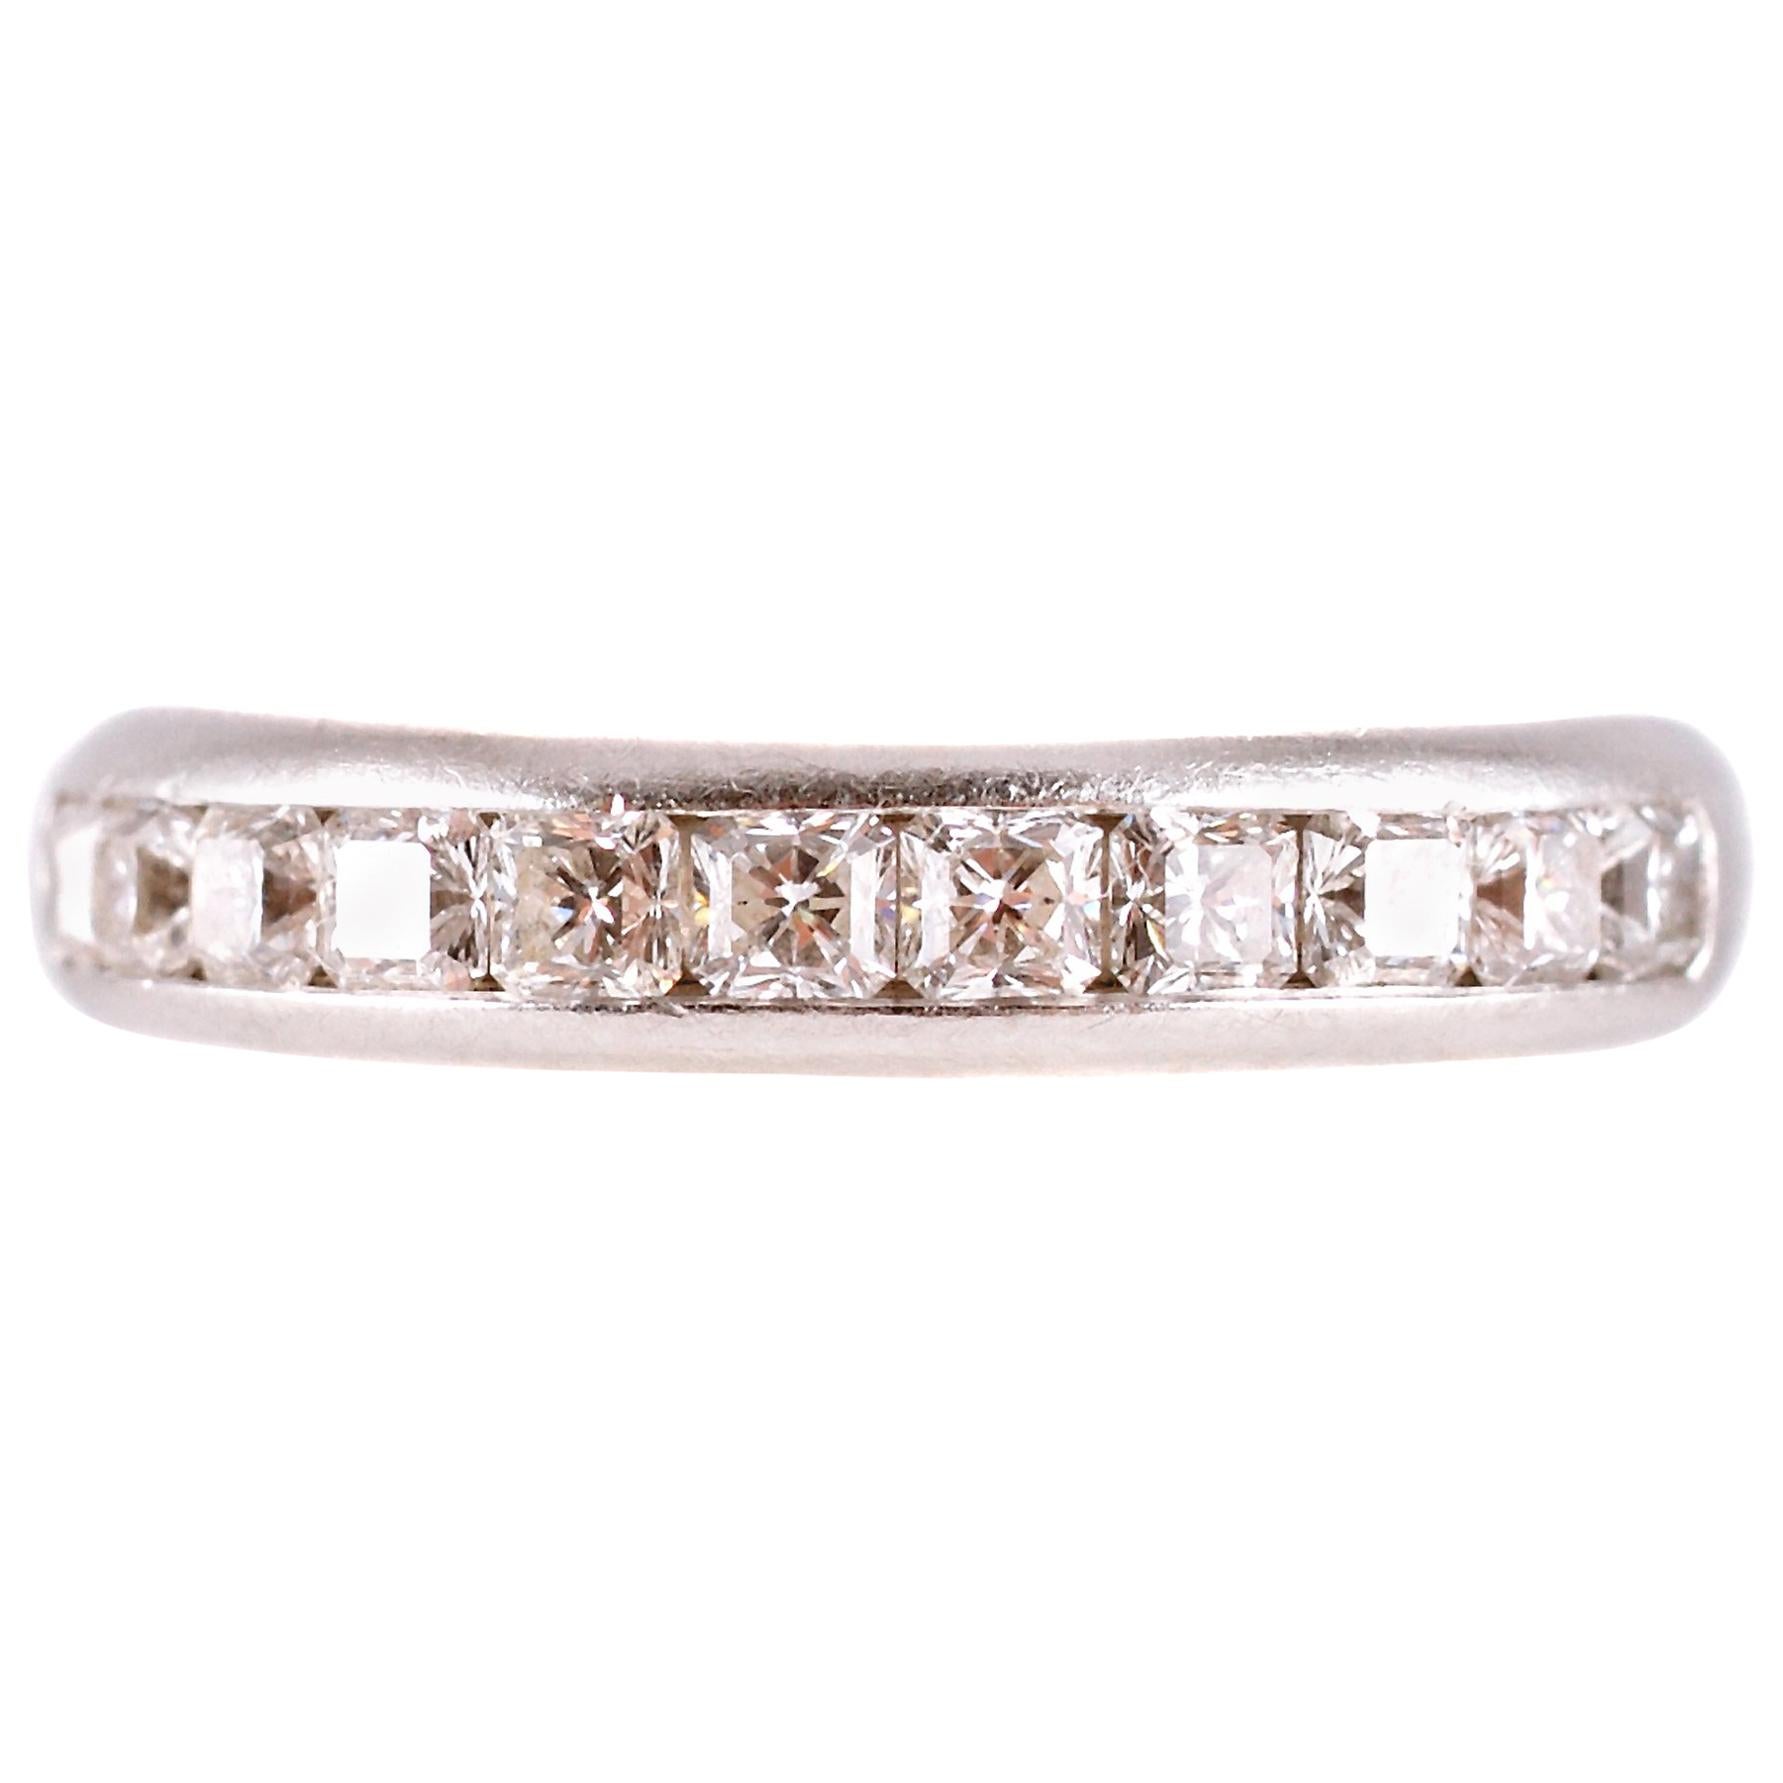 Tiffany & Co. 0.55 Carat Diamond Ring "Lucida Collection"